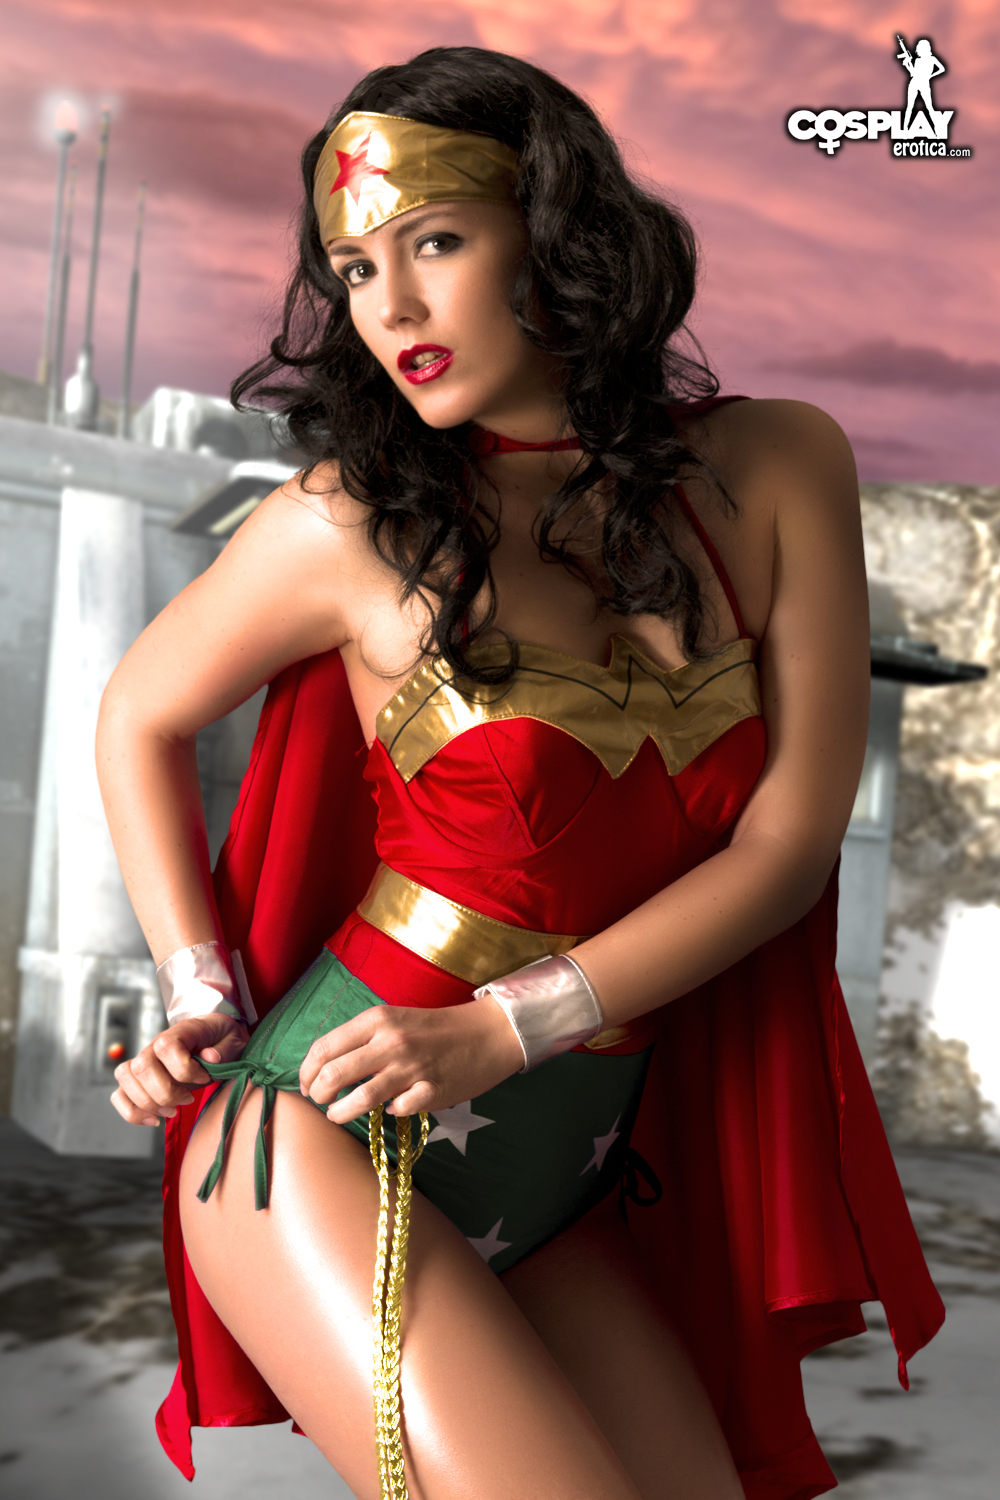 Wonder woman naked cosplay